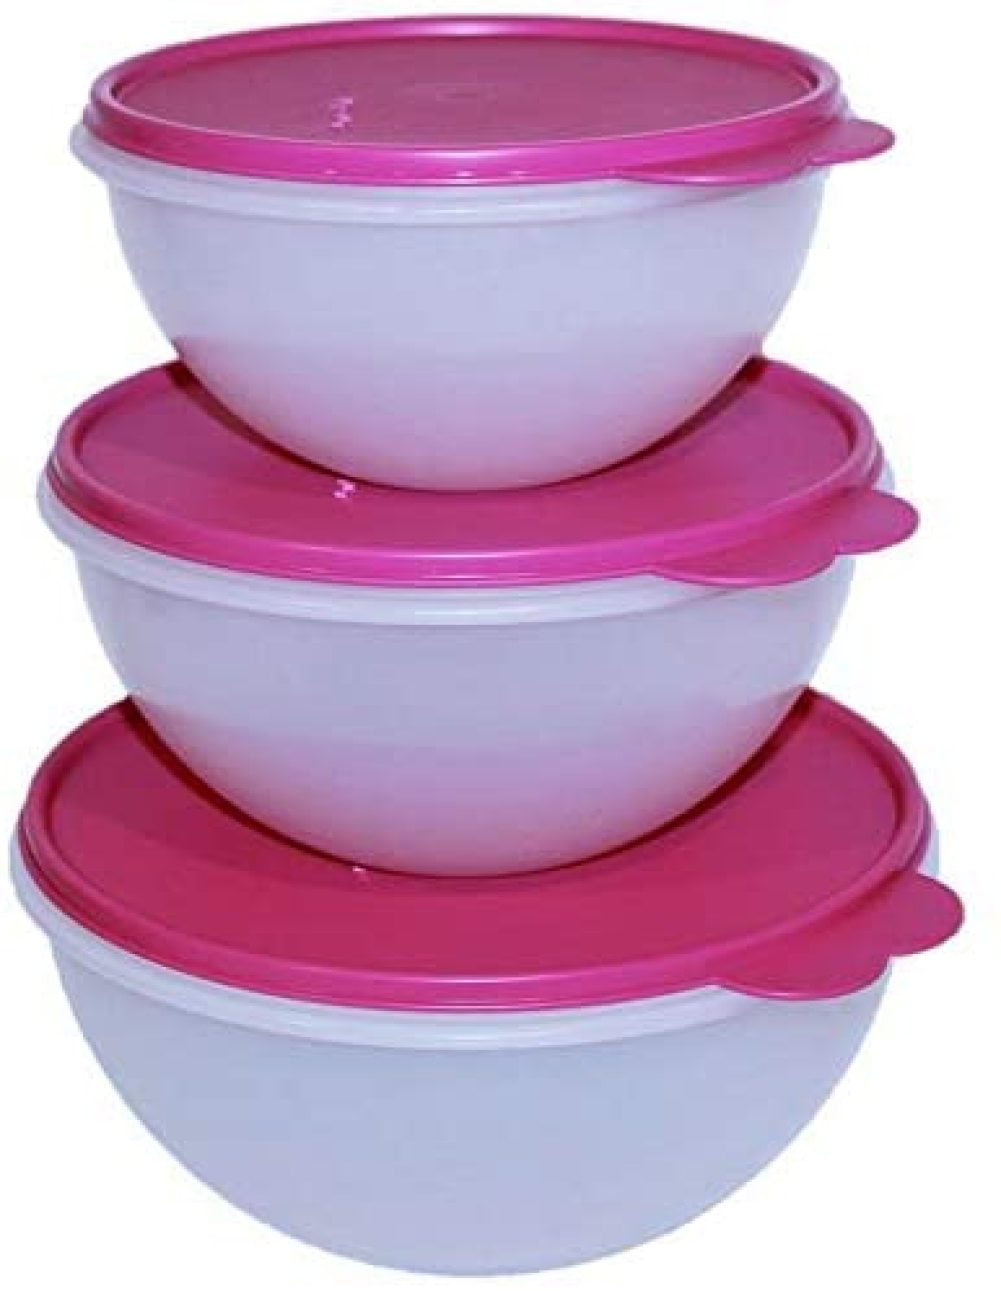 Brand New Tupperware Wonderlier Mixing Bowls Set of 5 Sparkle Red Purple Pink 